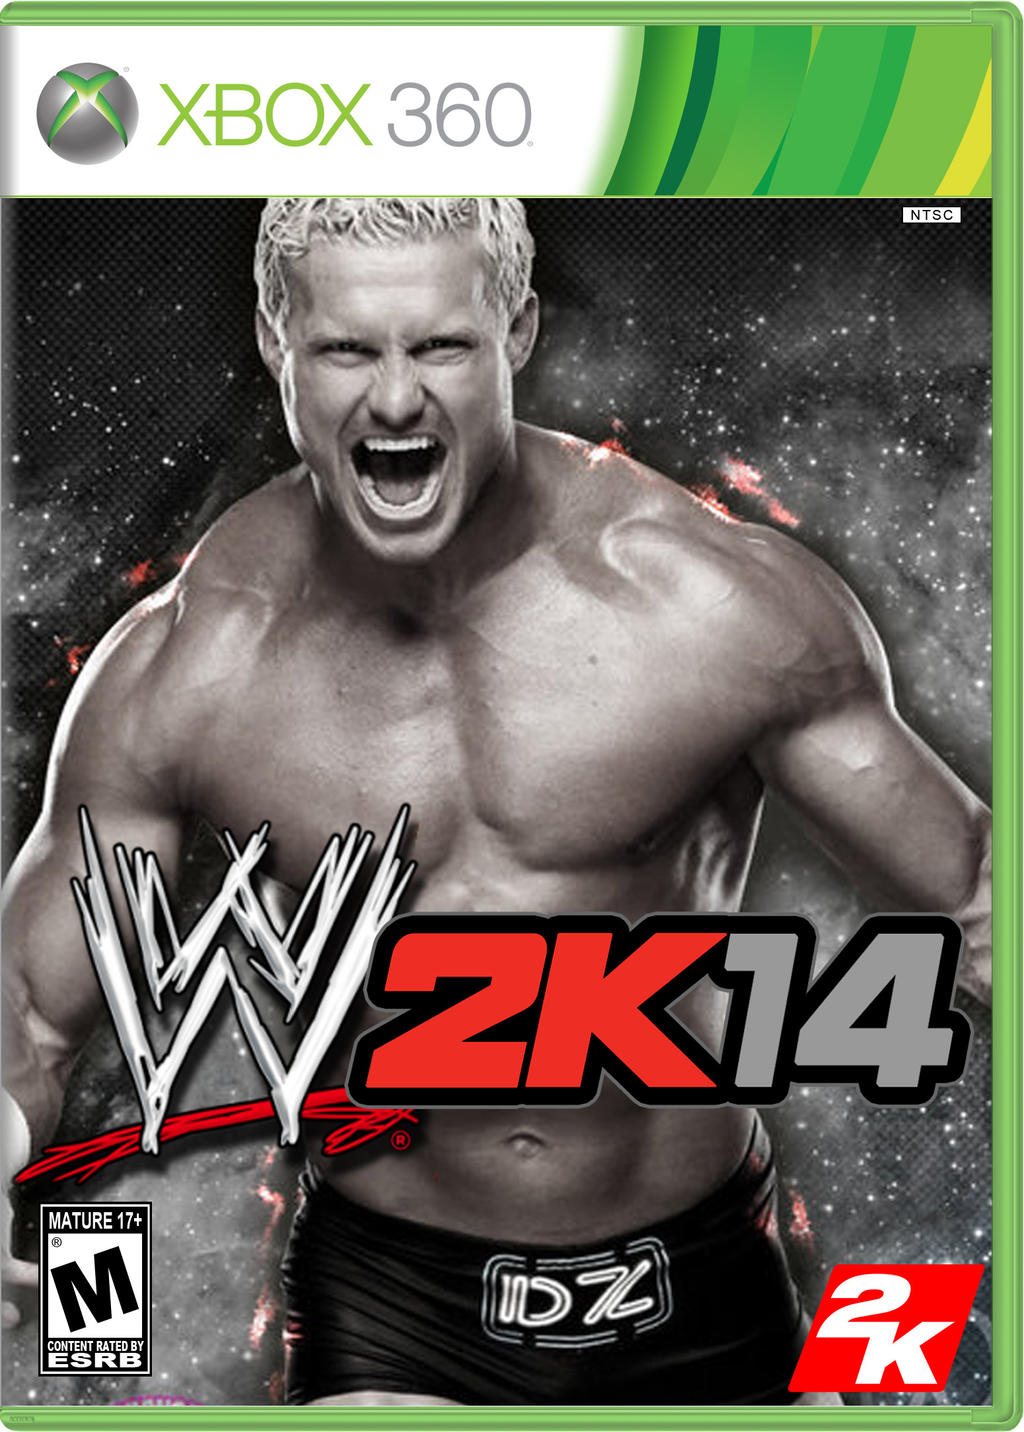 WWE 2K14 (XBox 360 Cover) by DJRocket on DeviantArt
 Wwe 2k14 Cover Xbox 360